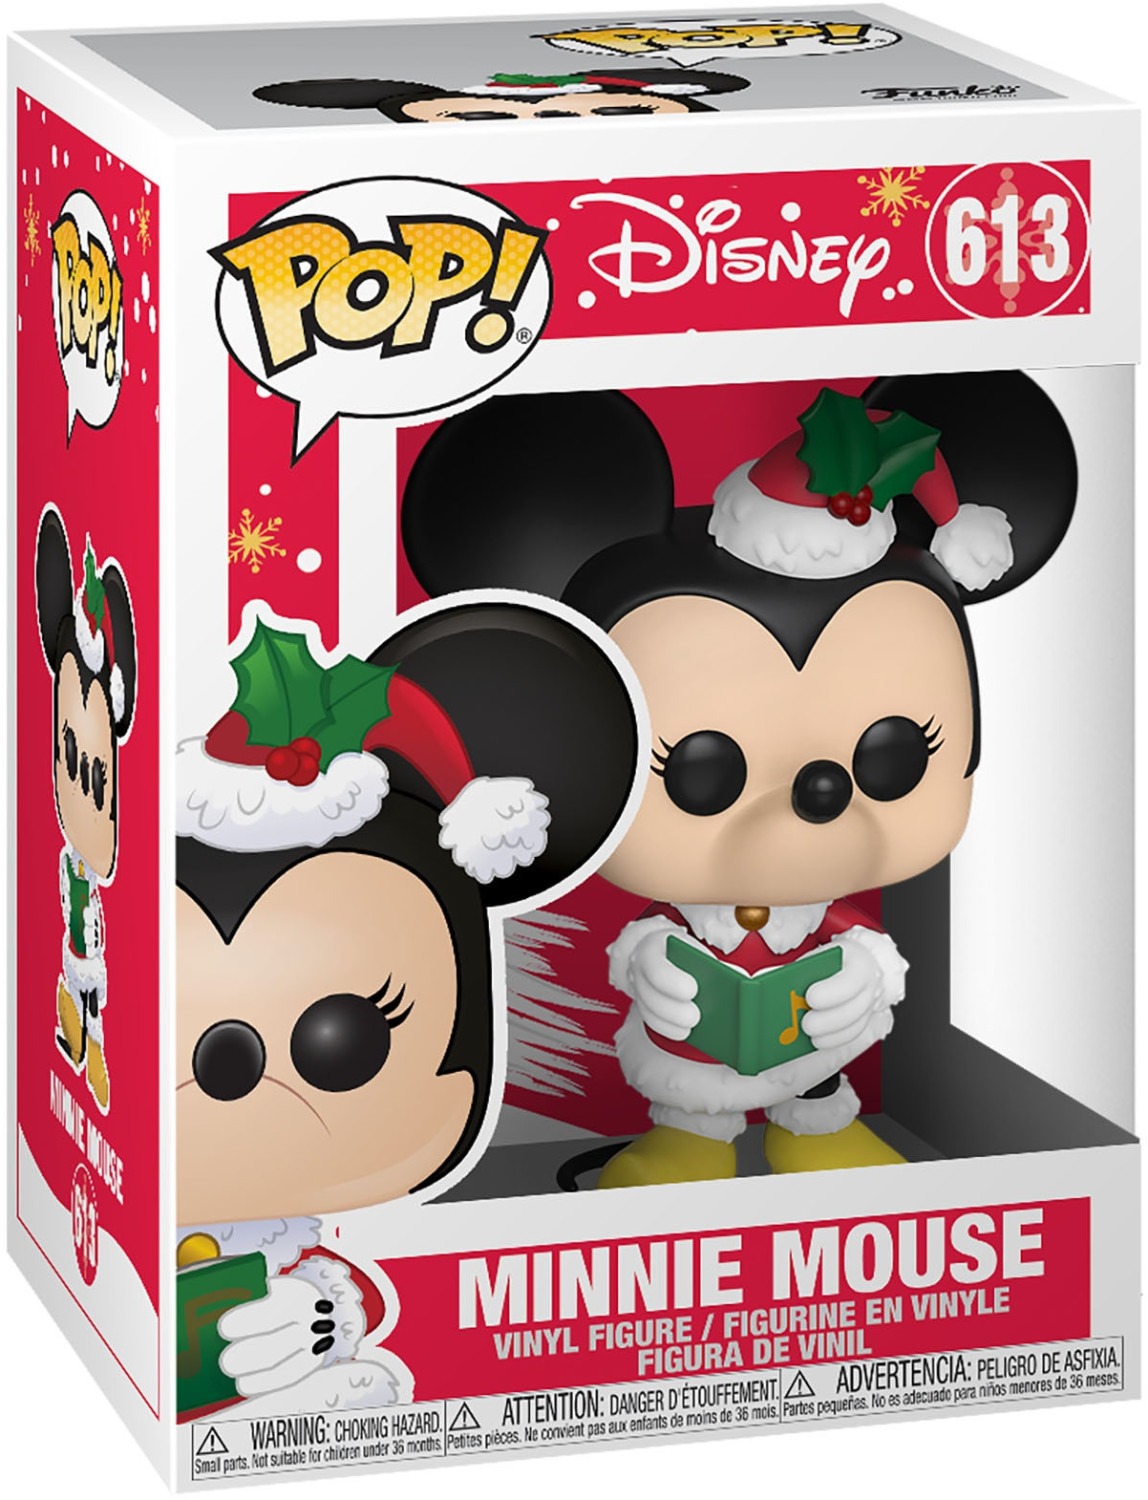 Funko Pop! Disney - Minnie Mouse 613 desde 18,99 €